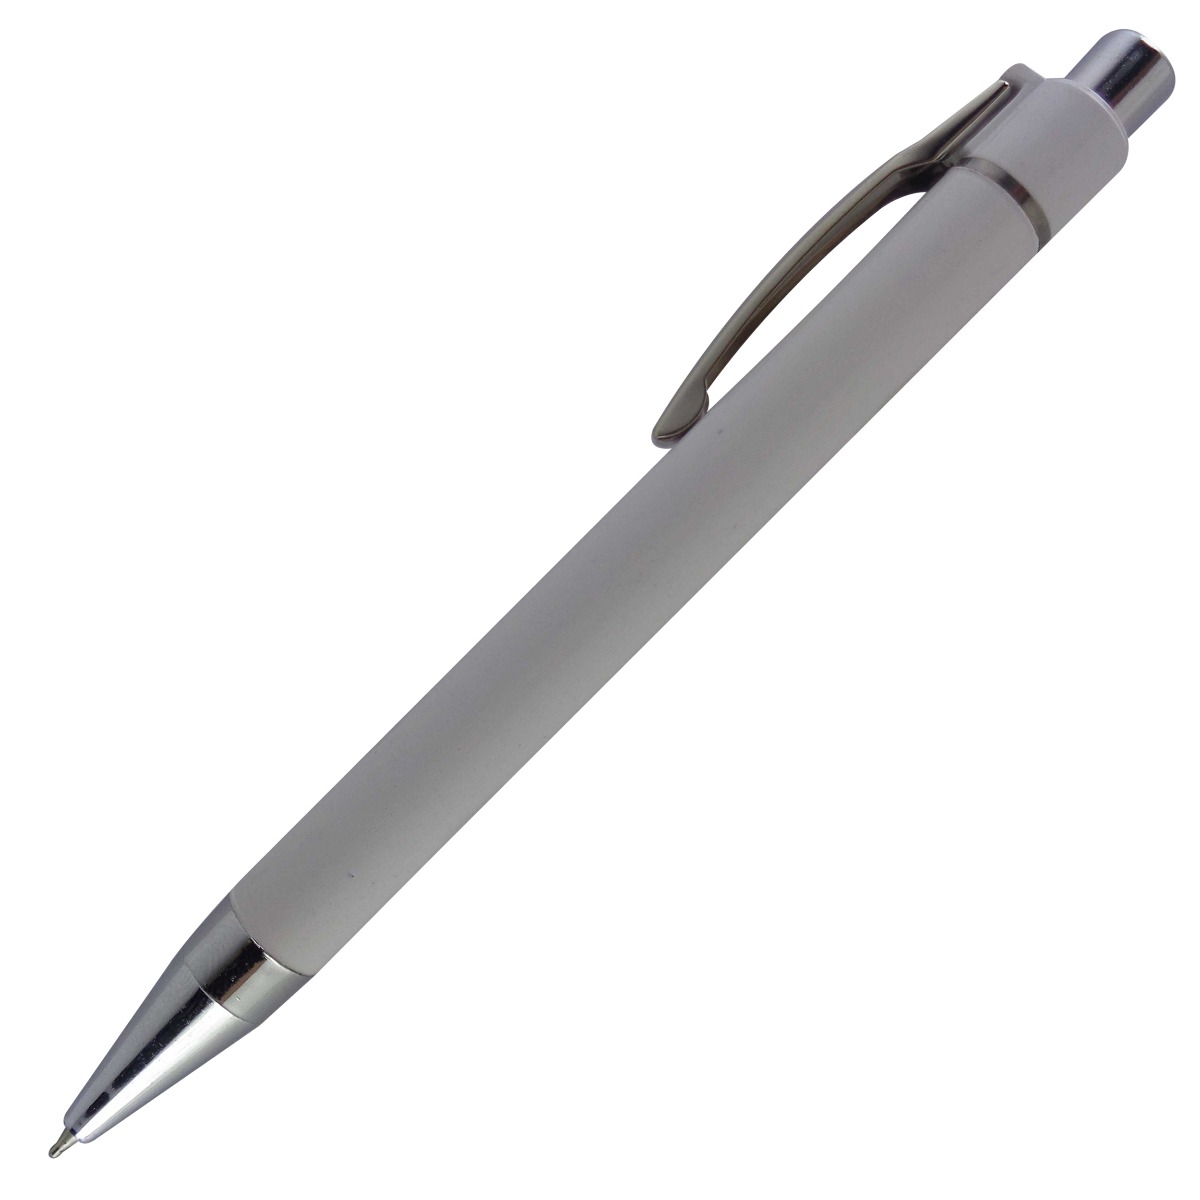 Penhouse.in Model: 14953 White color body with silver color clip fine tip retractable ball pen